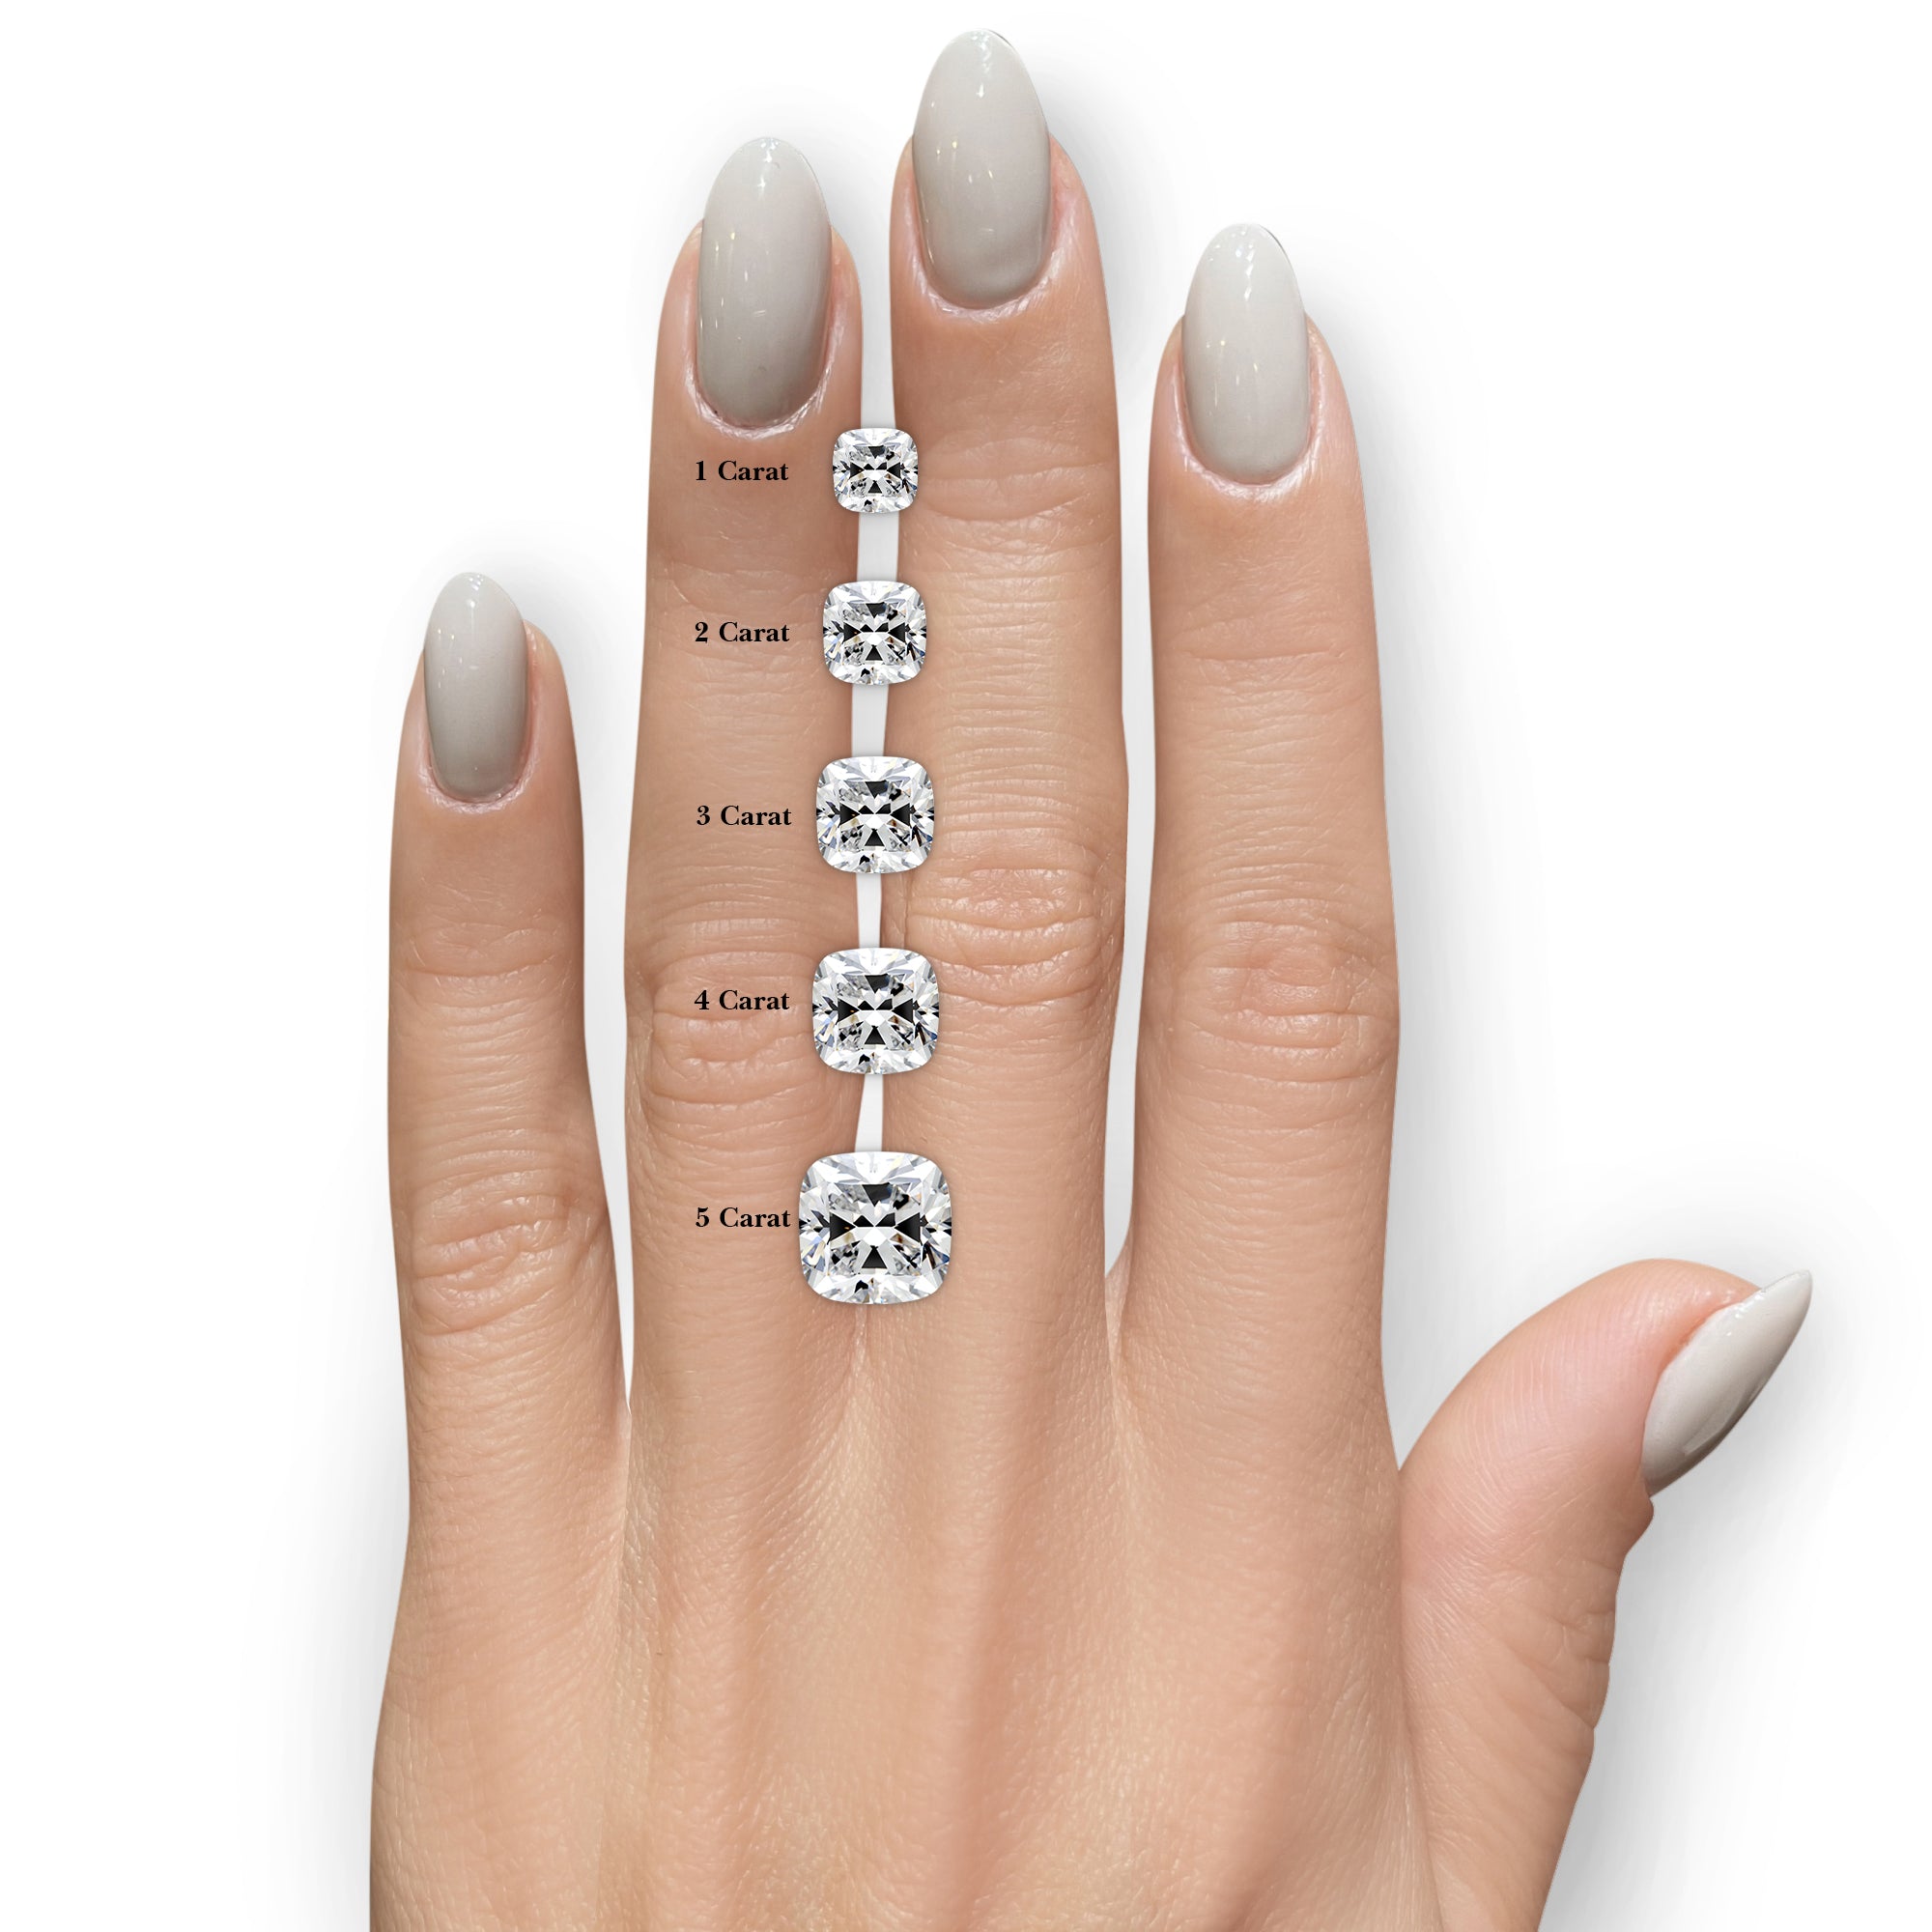 Emery Diamond Engagement Ring   (1.8 Carat) - 18K White Gold